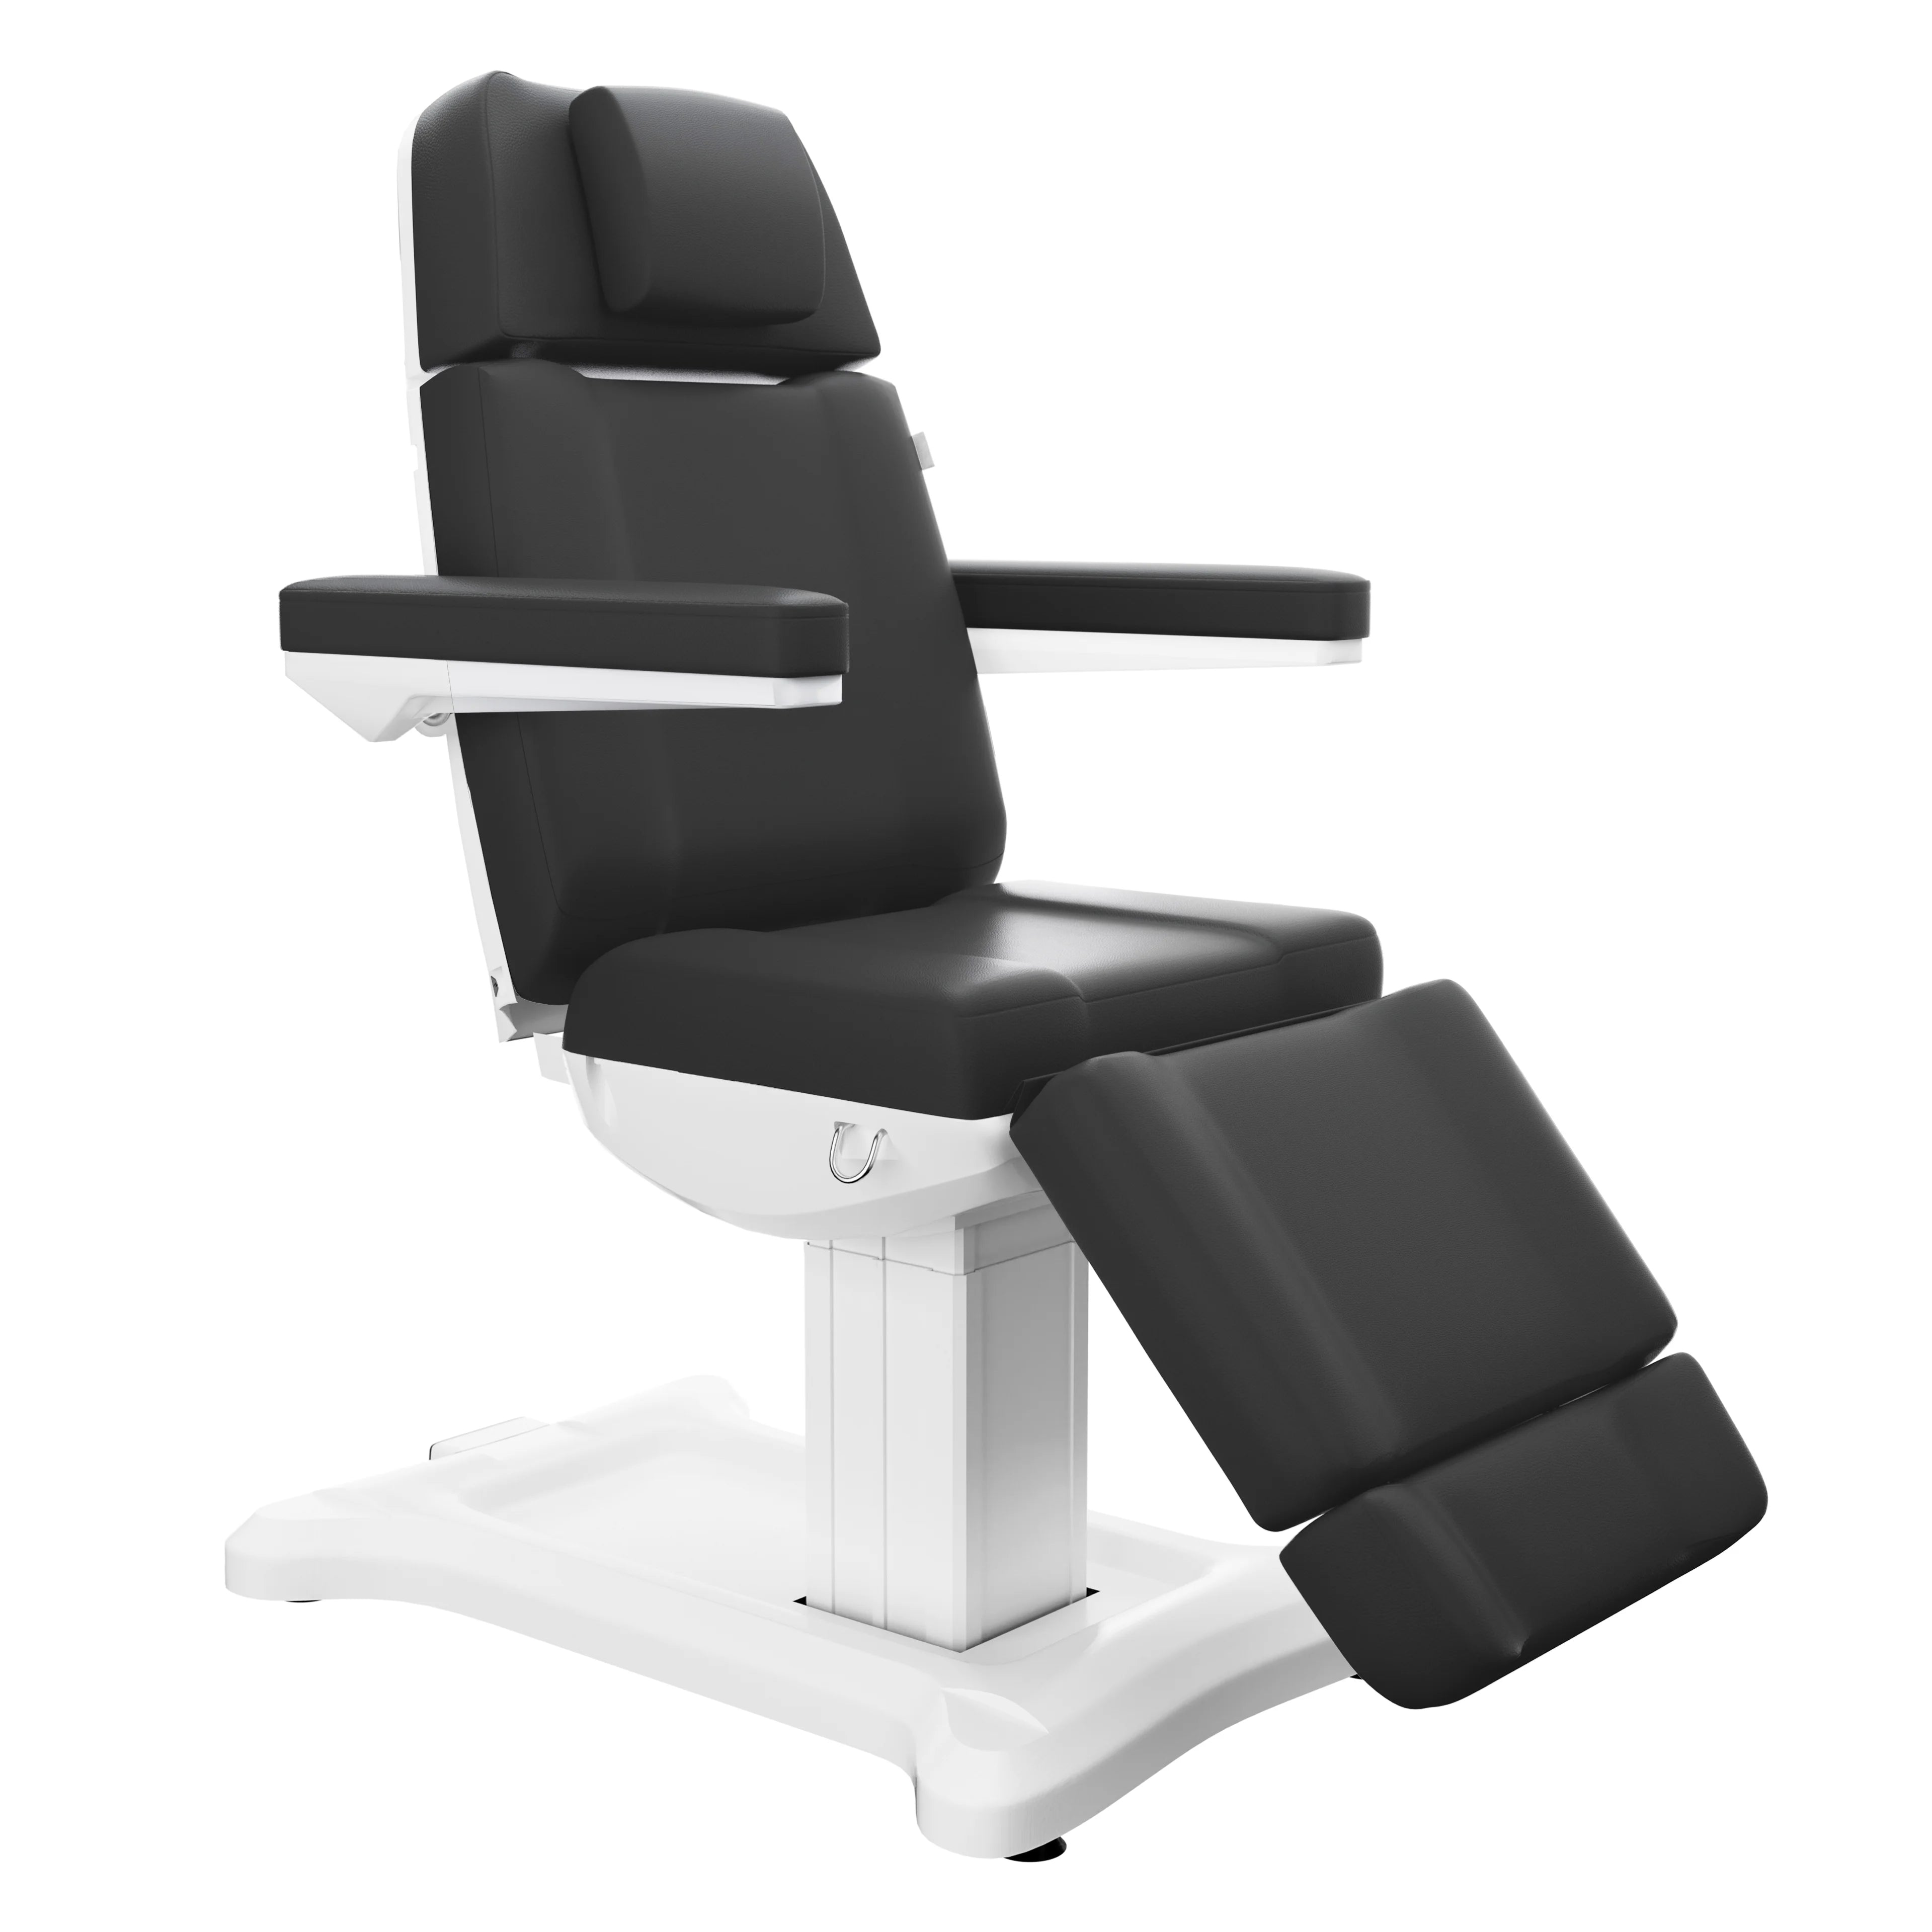 SpaMarc . Tomar (Dark Gray) . 3 Motor Spa Treatment Chair / Bed